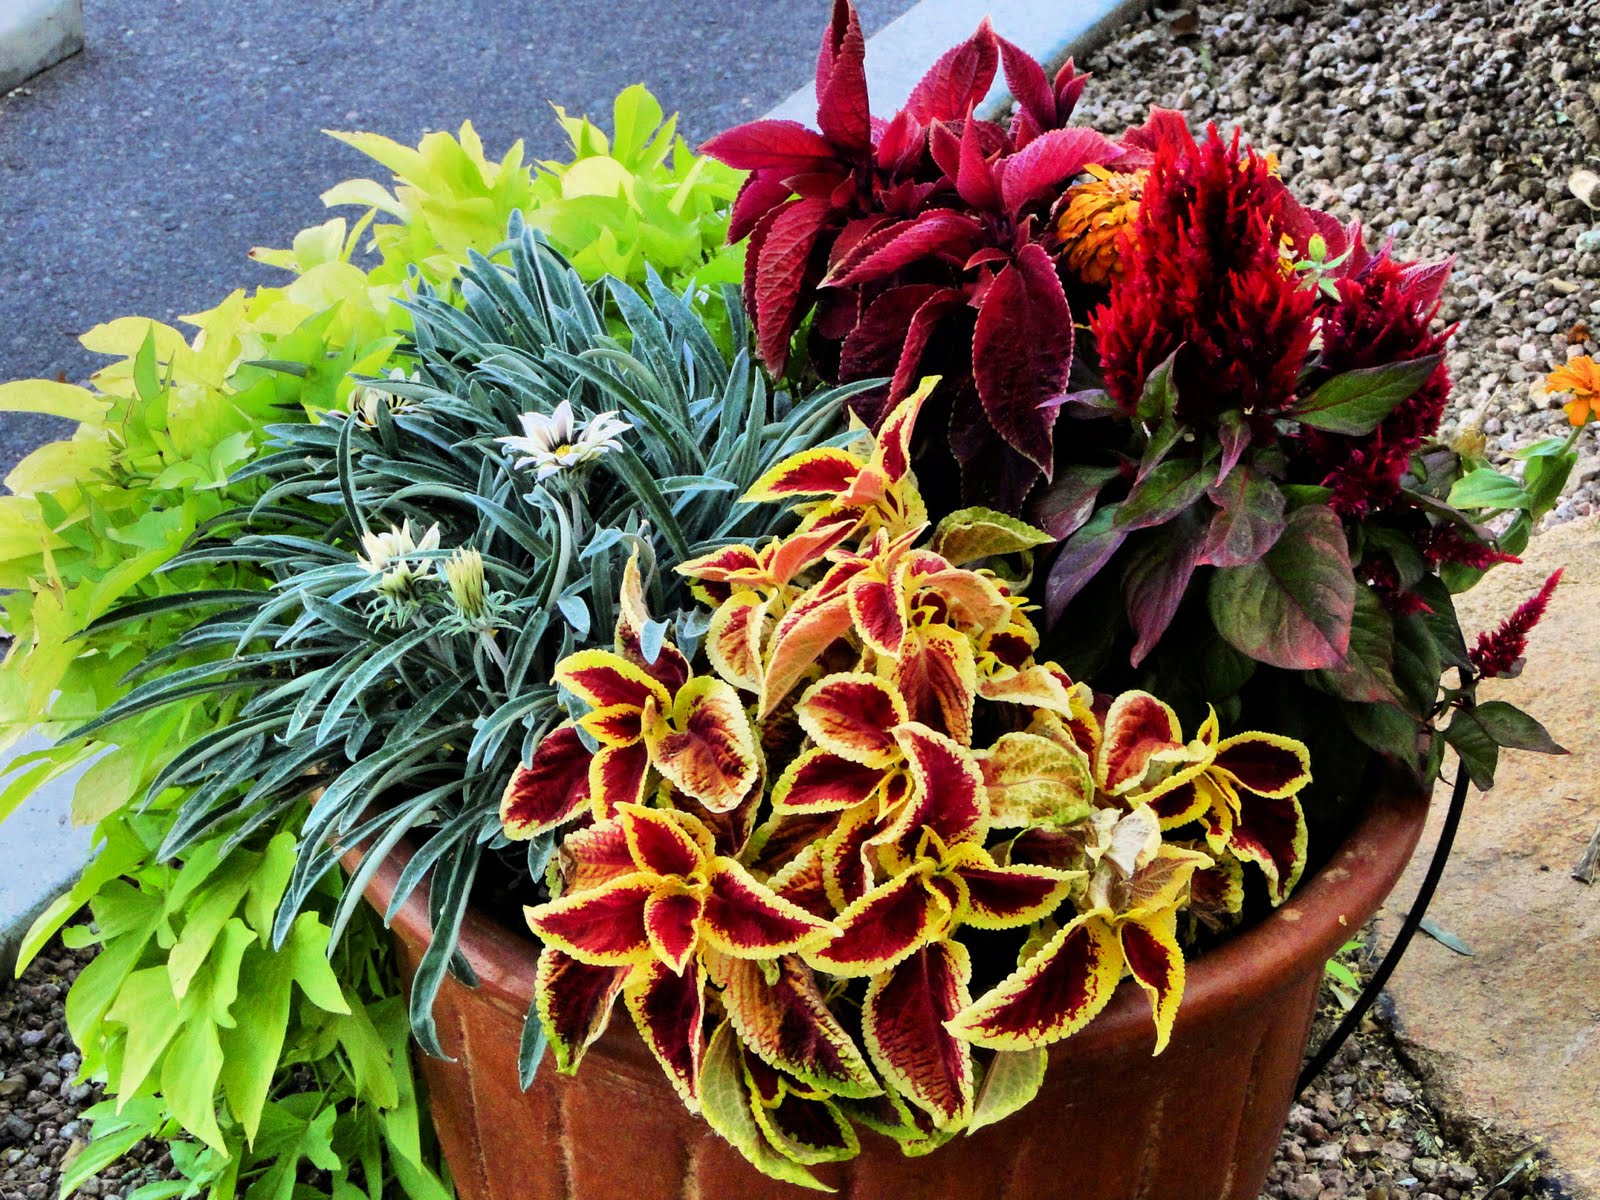 Phoenix Daily Photo: Colorful Plants